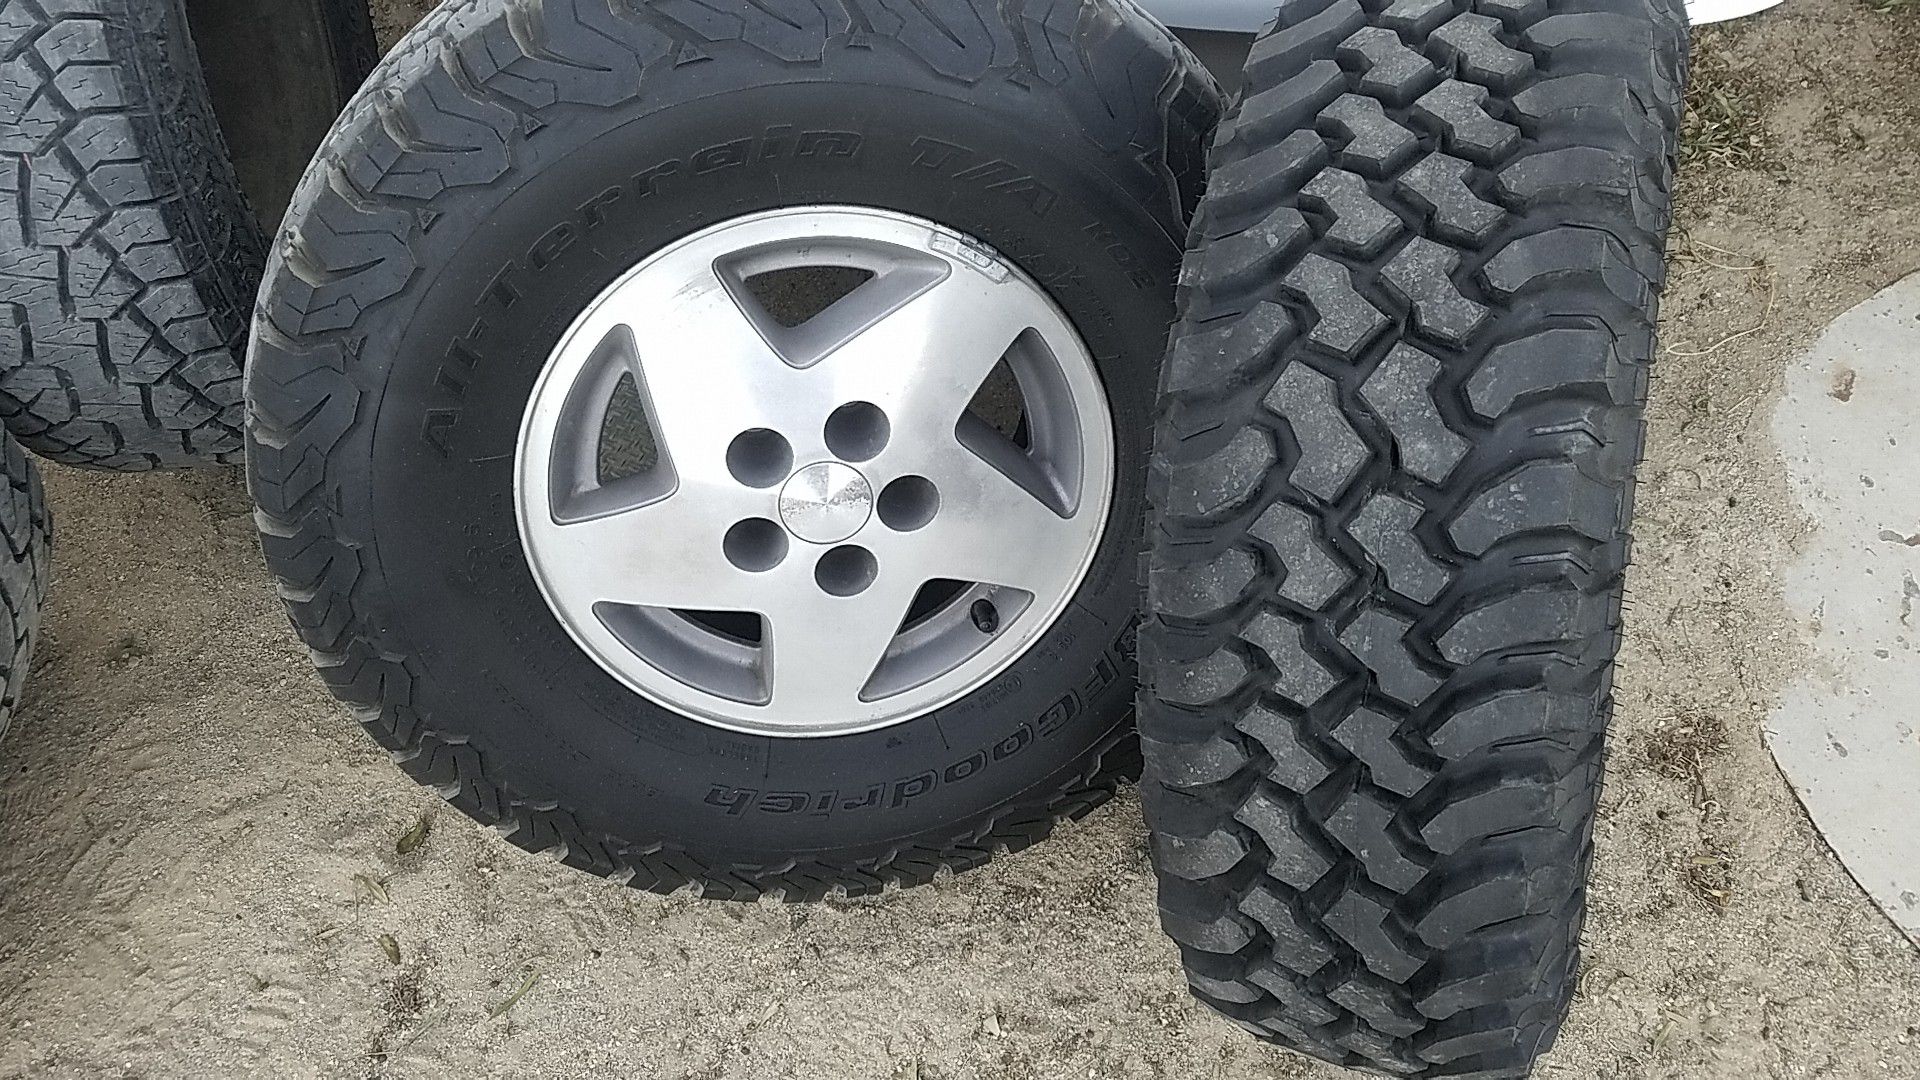 Jeep Cherokee wheels and tires 5 lug 31.10.50 15